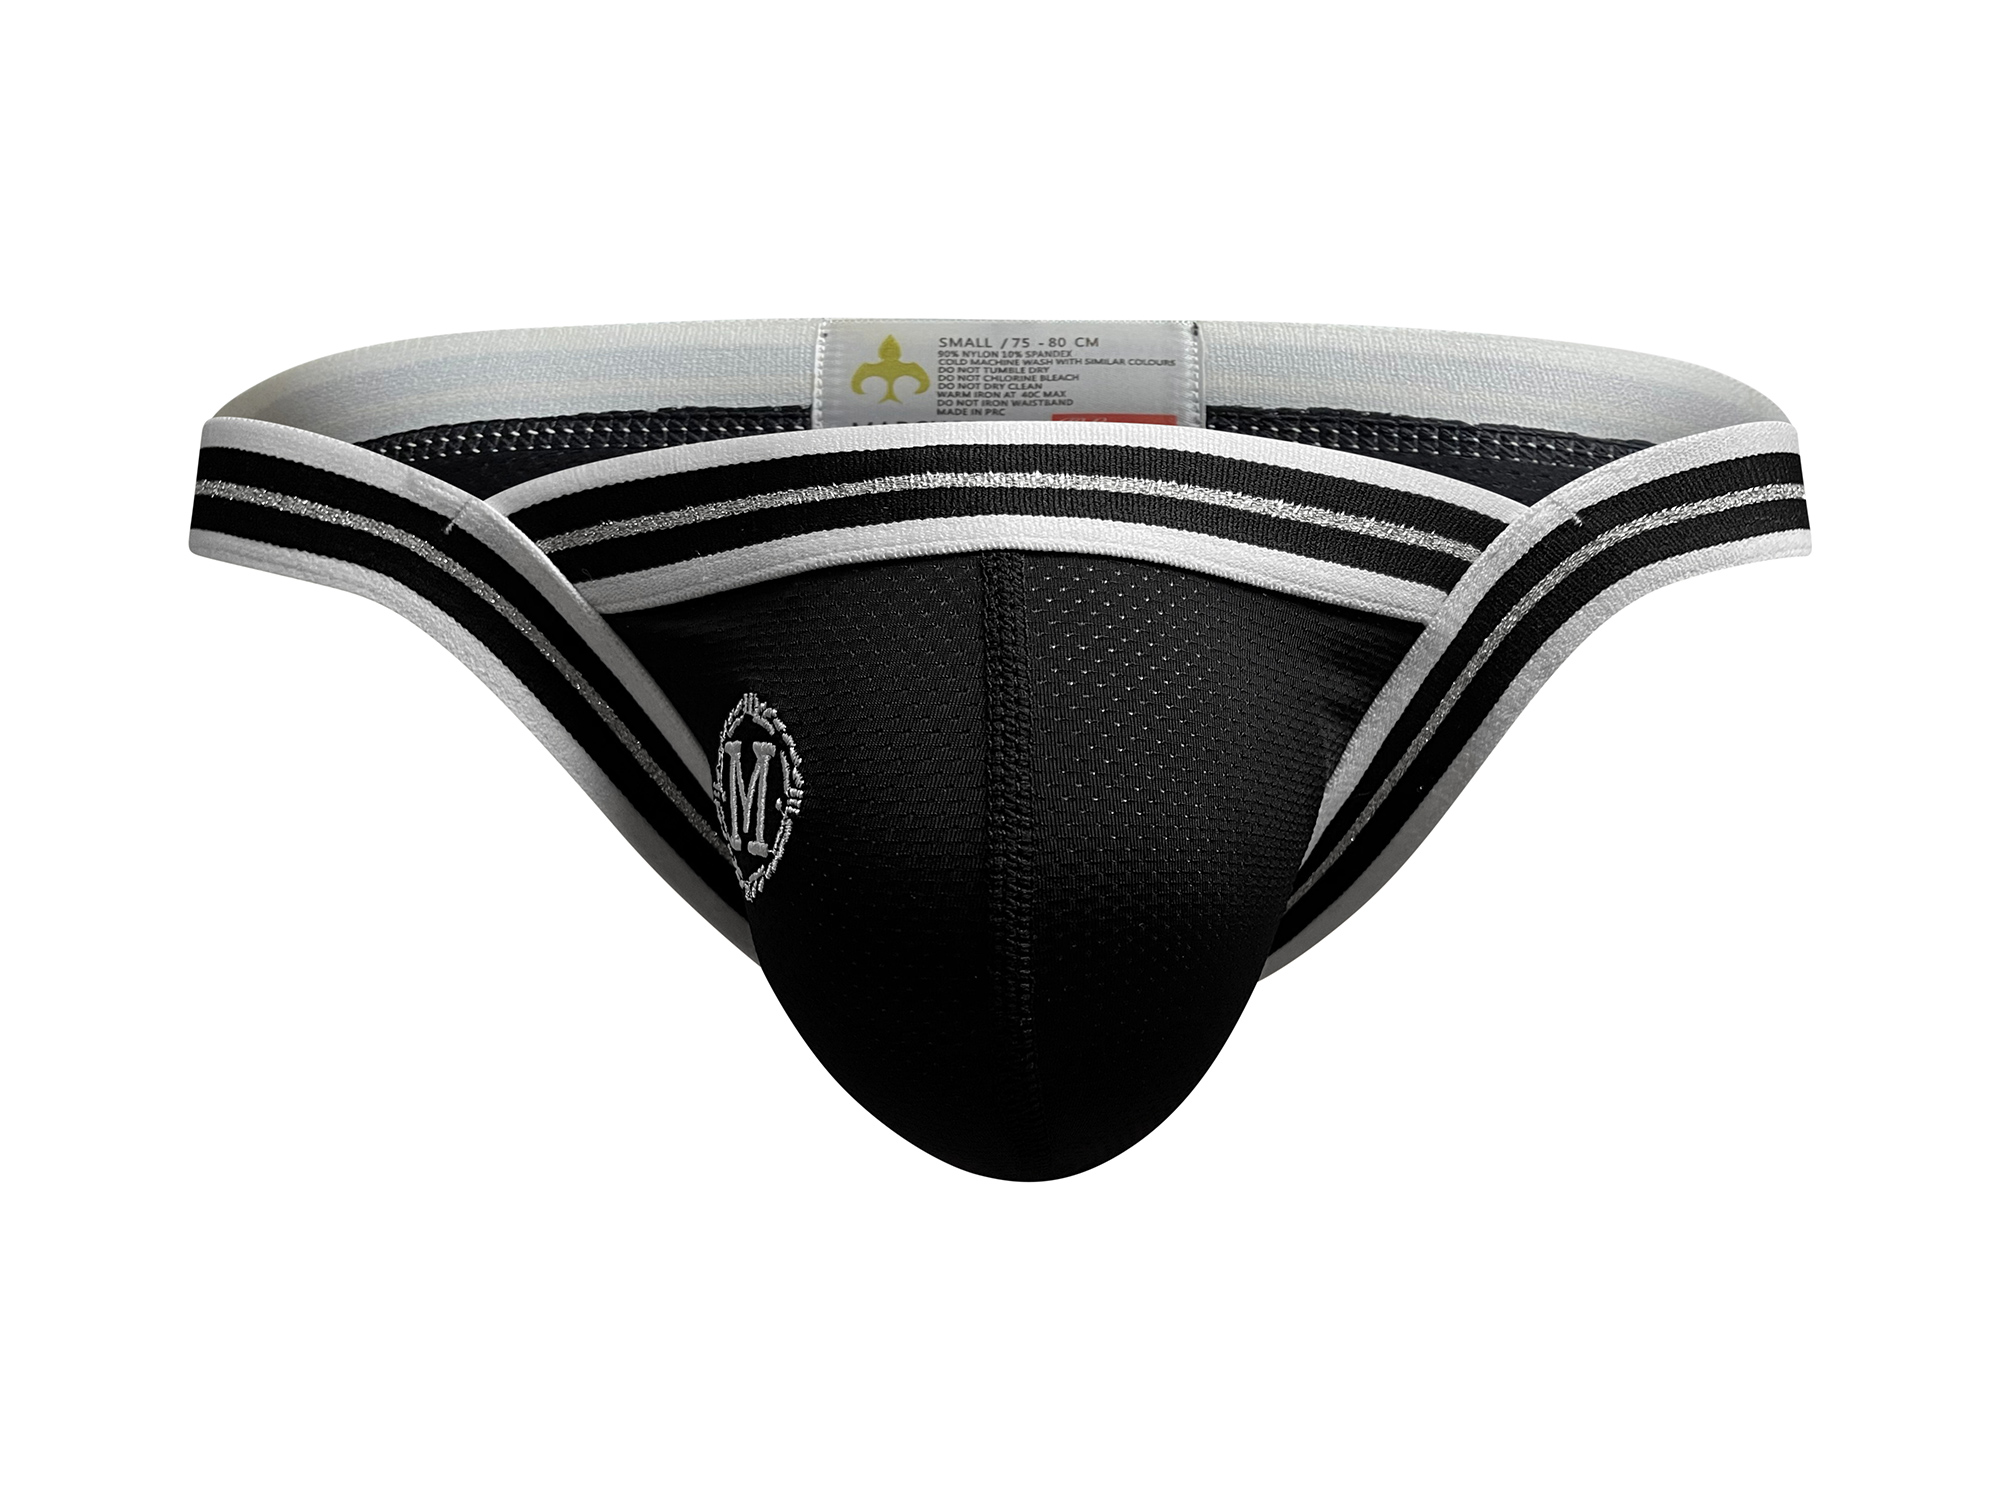 Marcuse Australia underwear - Arose brief black